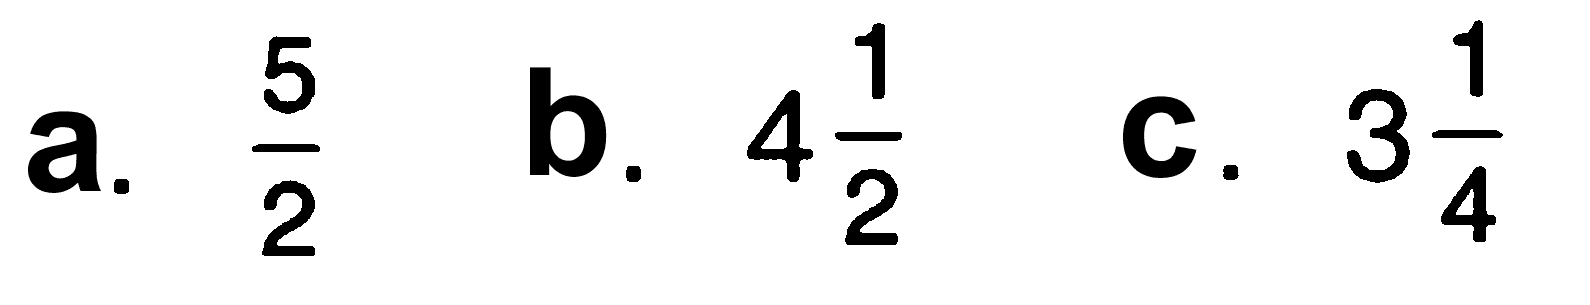 a. 5/2 b. 4 1/2 c. 3 1/4